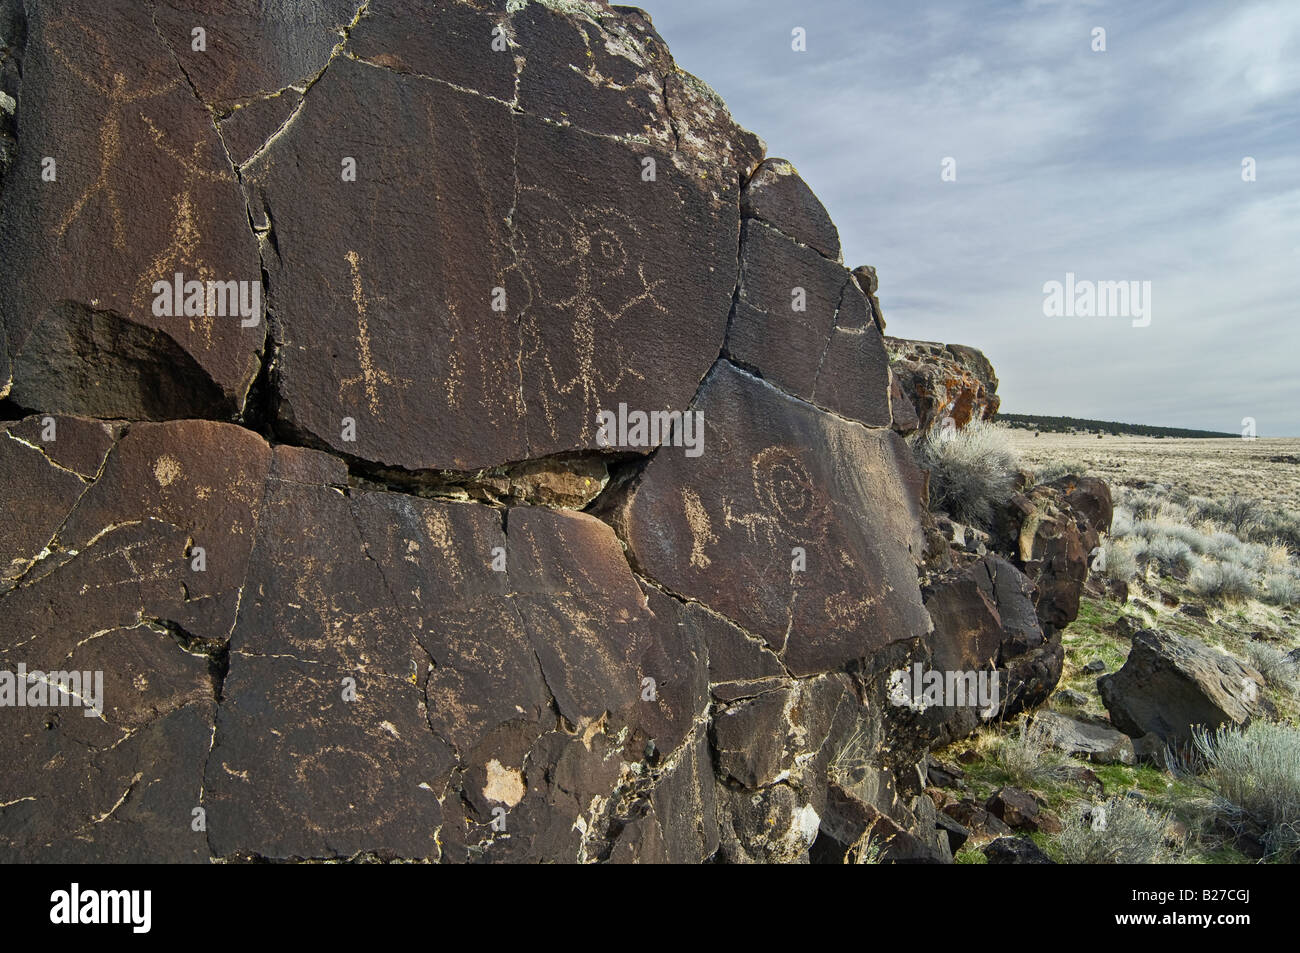 Native American pictograph rock carvings at Petroglyph Lake Hart Mountain National Antelope Refuge southeastern Oregon Stock Photo